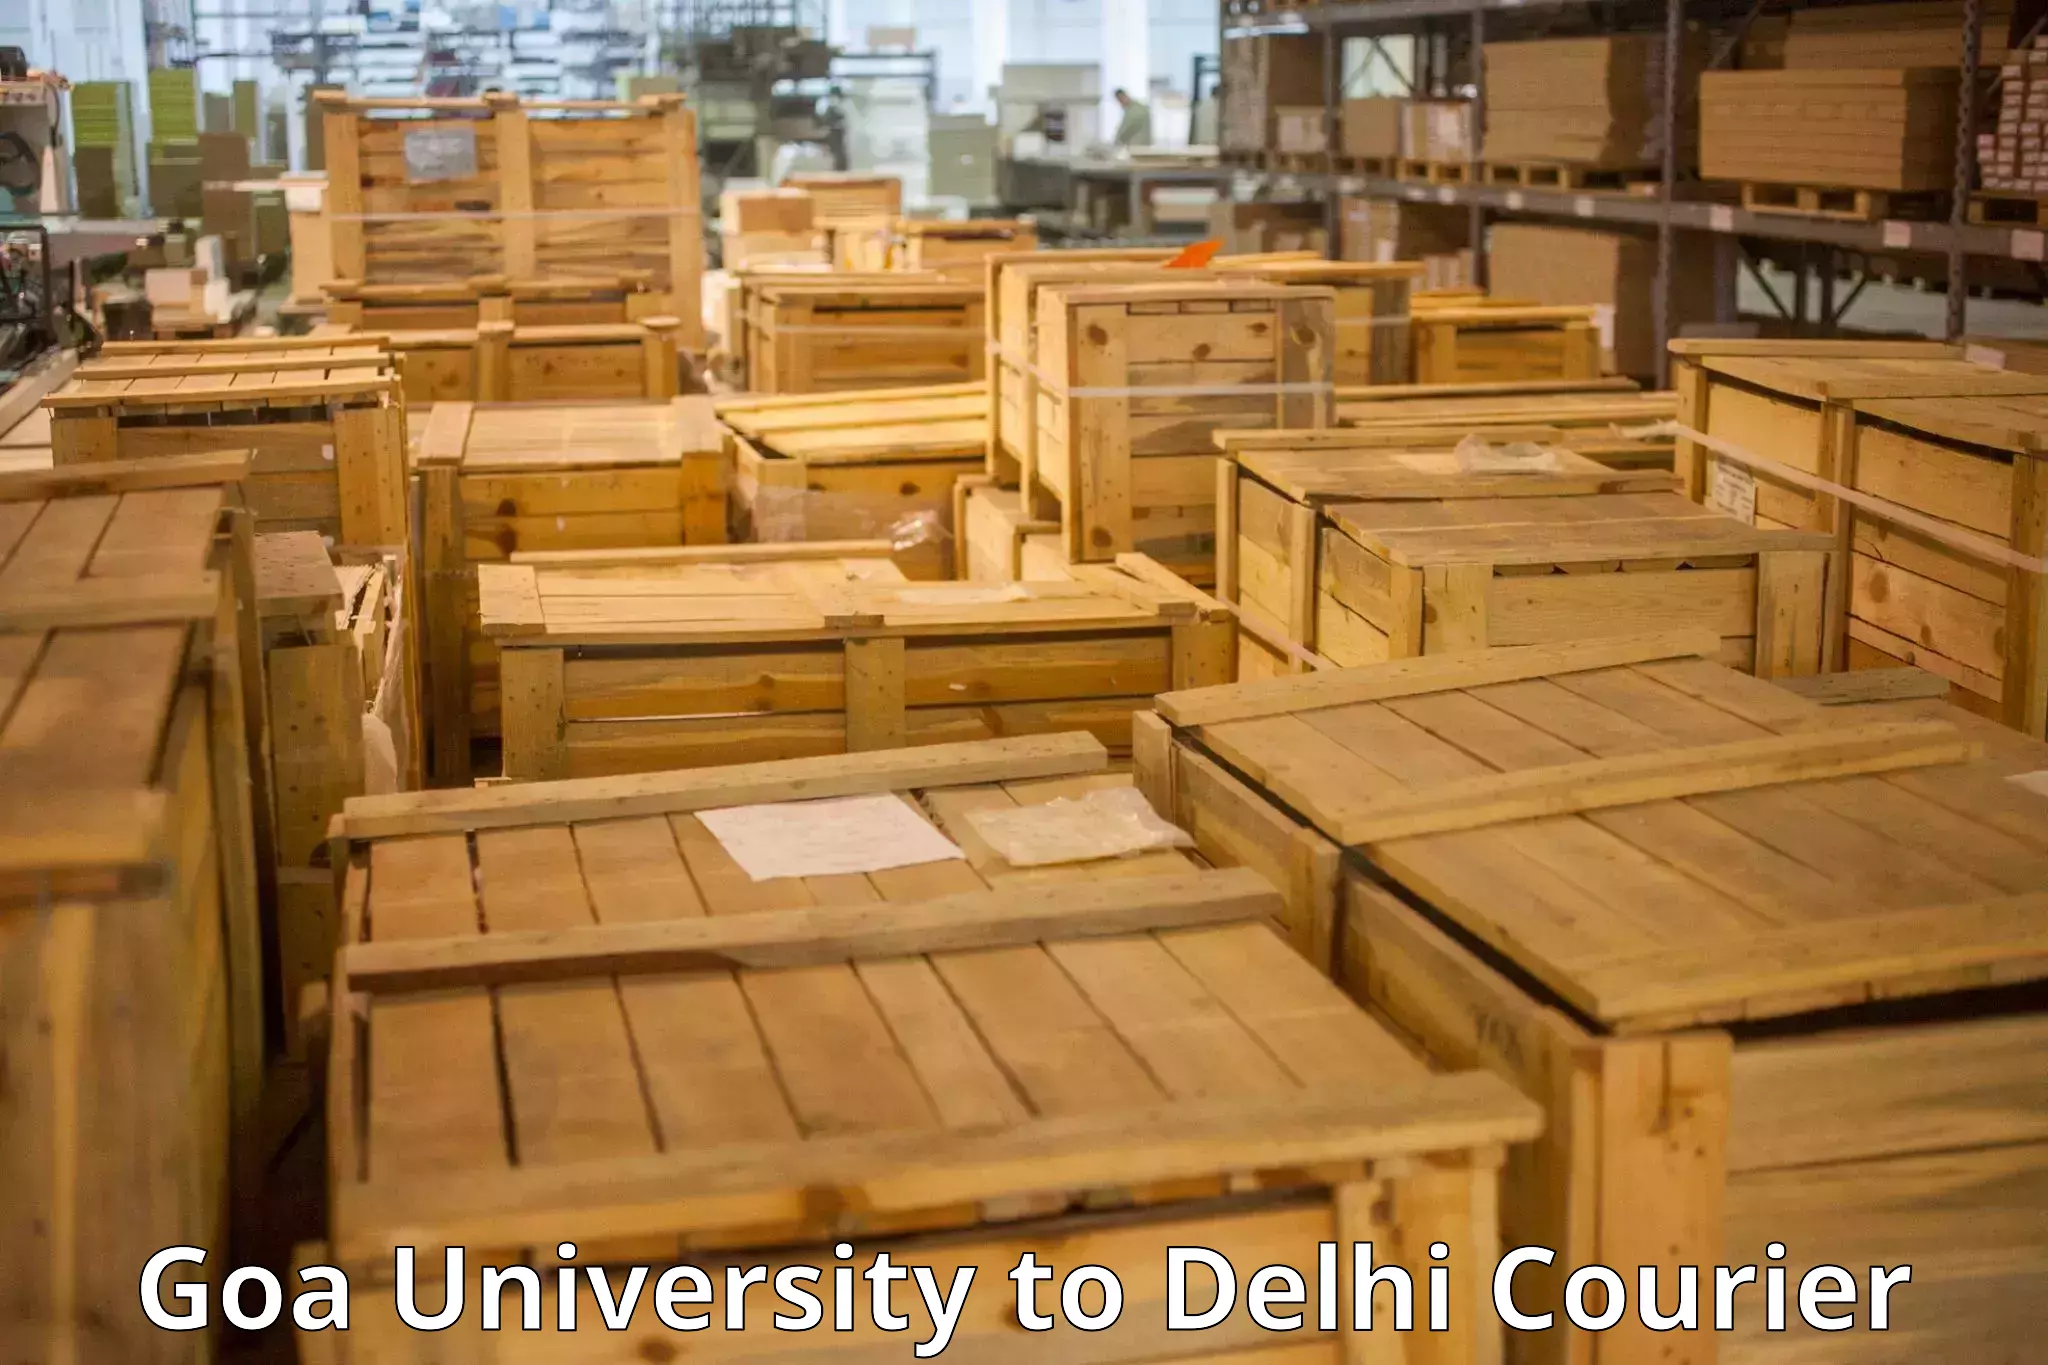 Baggage relocation service Goa University to East Delhi